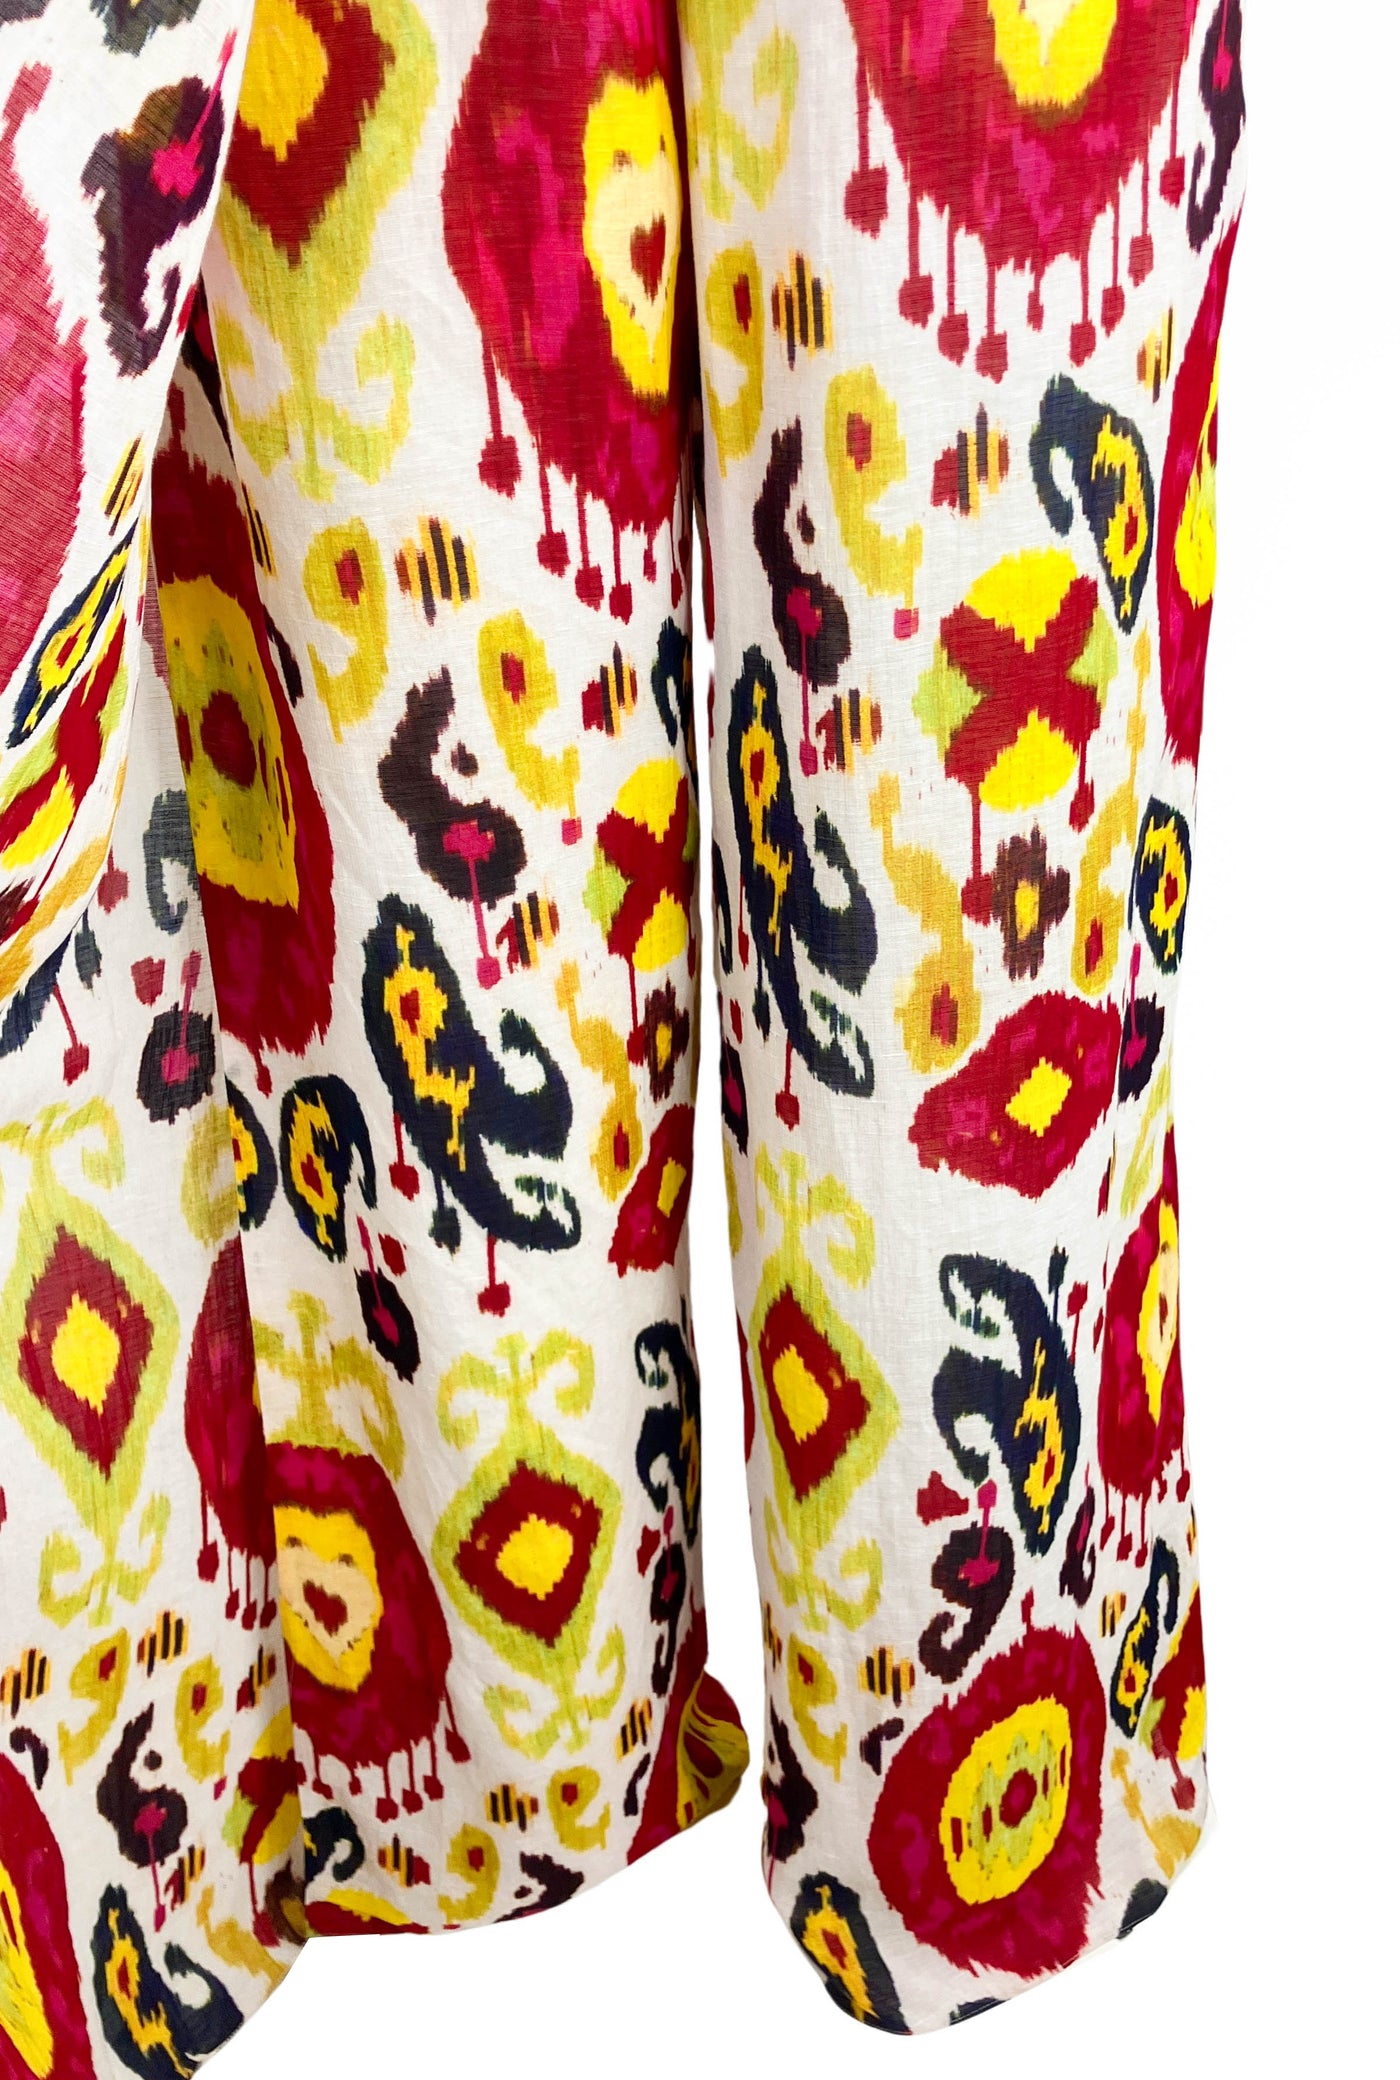 Ralph Lauren Strapless Jumpsuit in Spring Berry - Discounts on Ralph Lauren at UAL